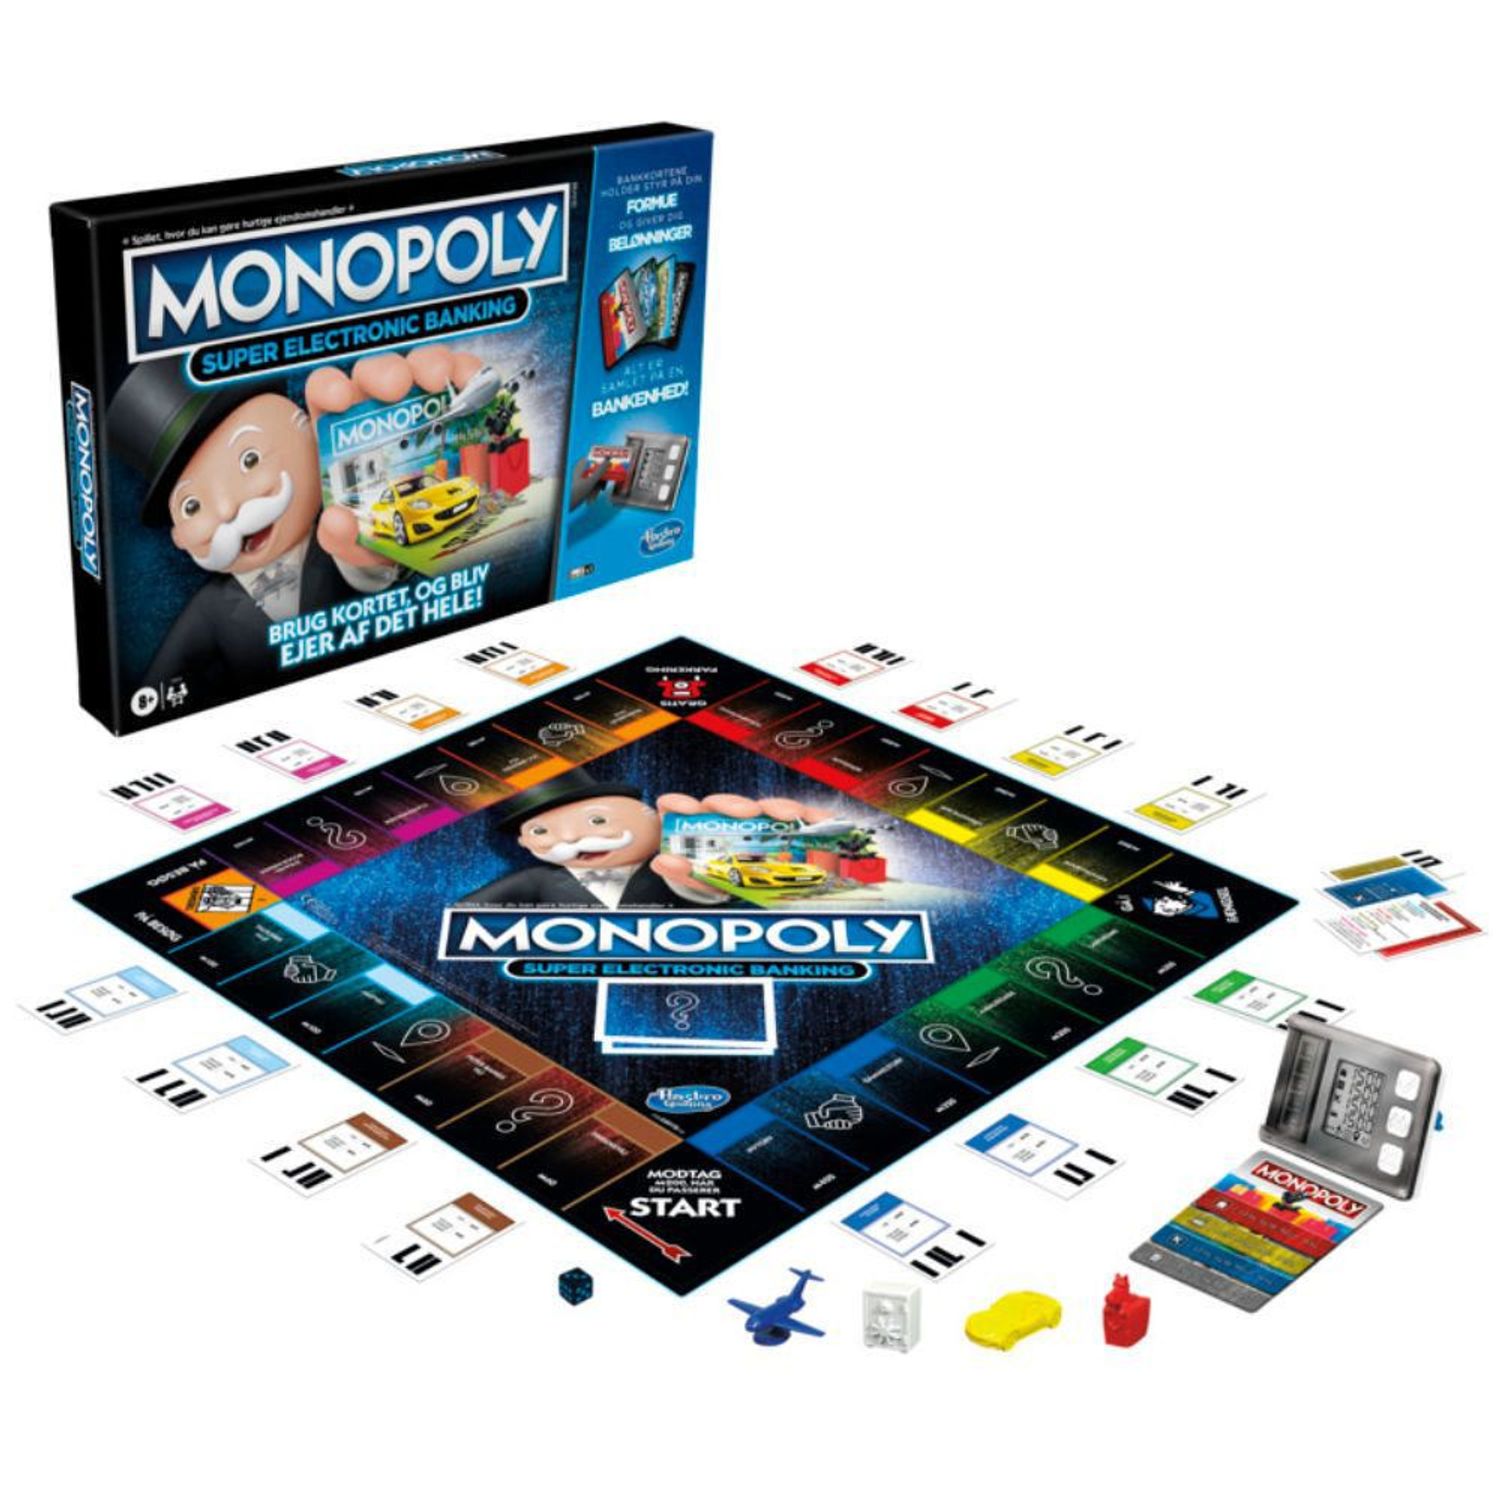 Monopoly Hasbro Super Banco Electronico E8978 Oechsle Pe Oechsle